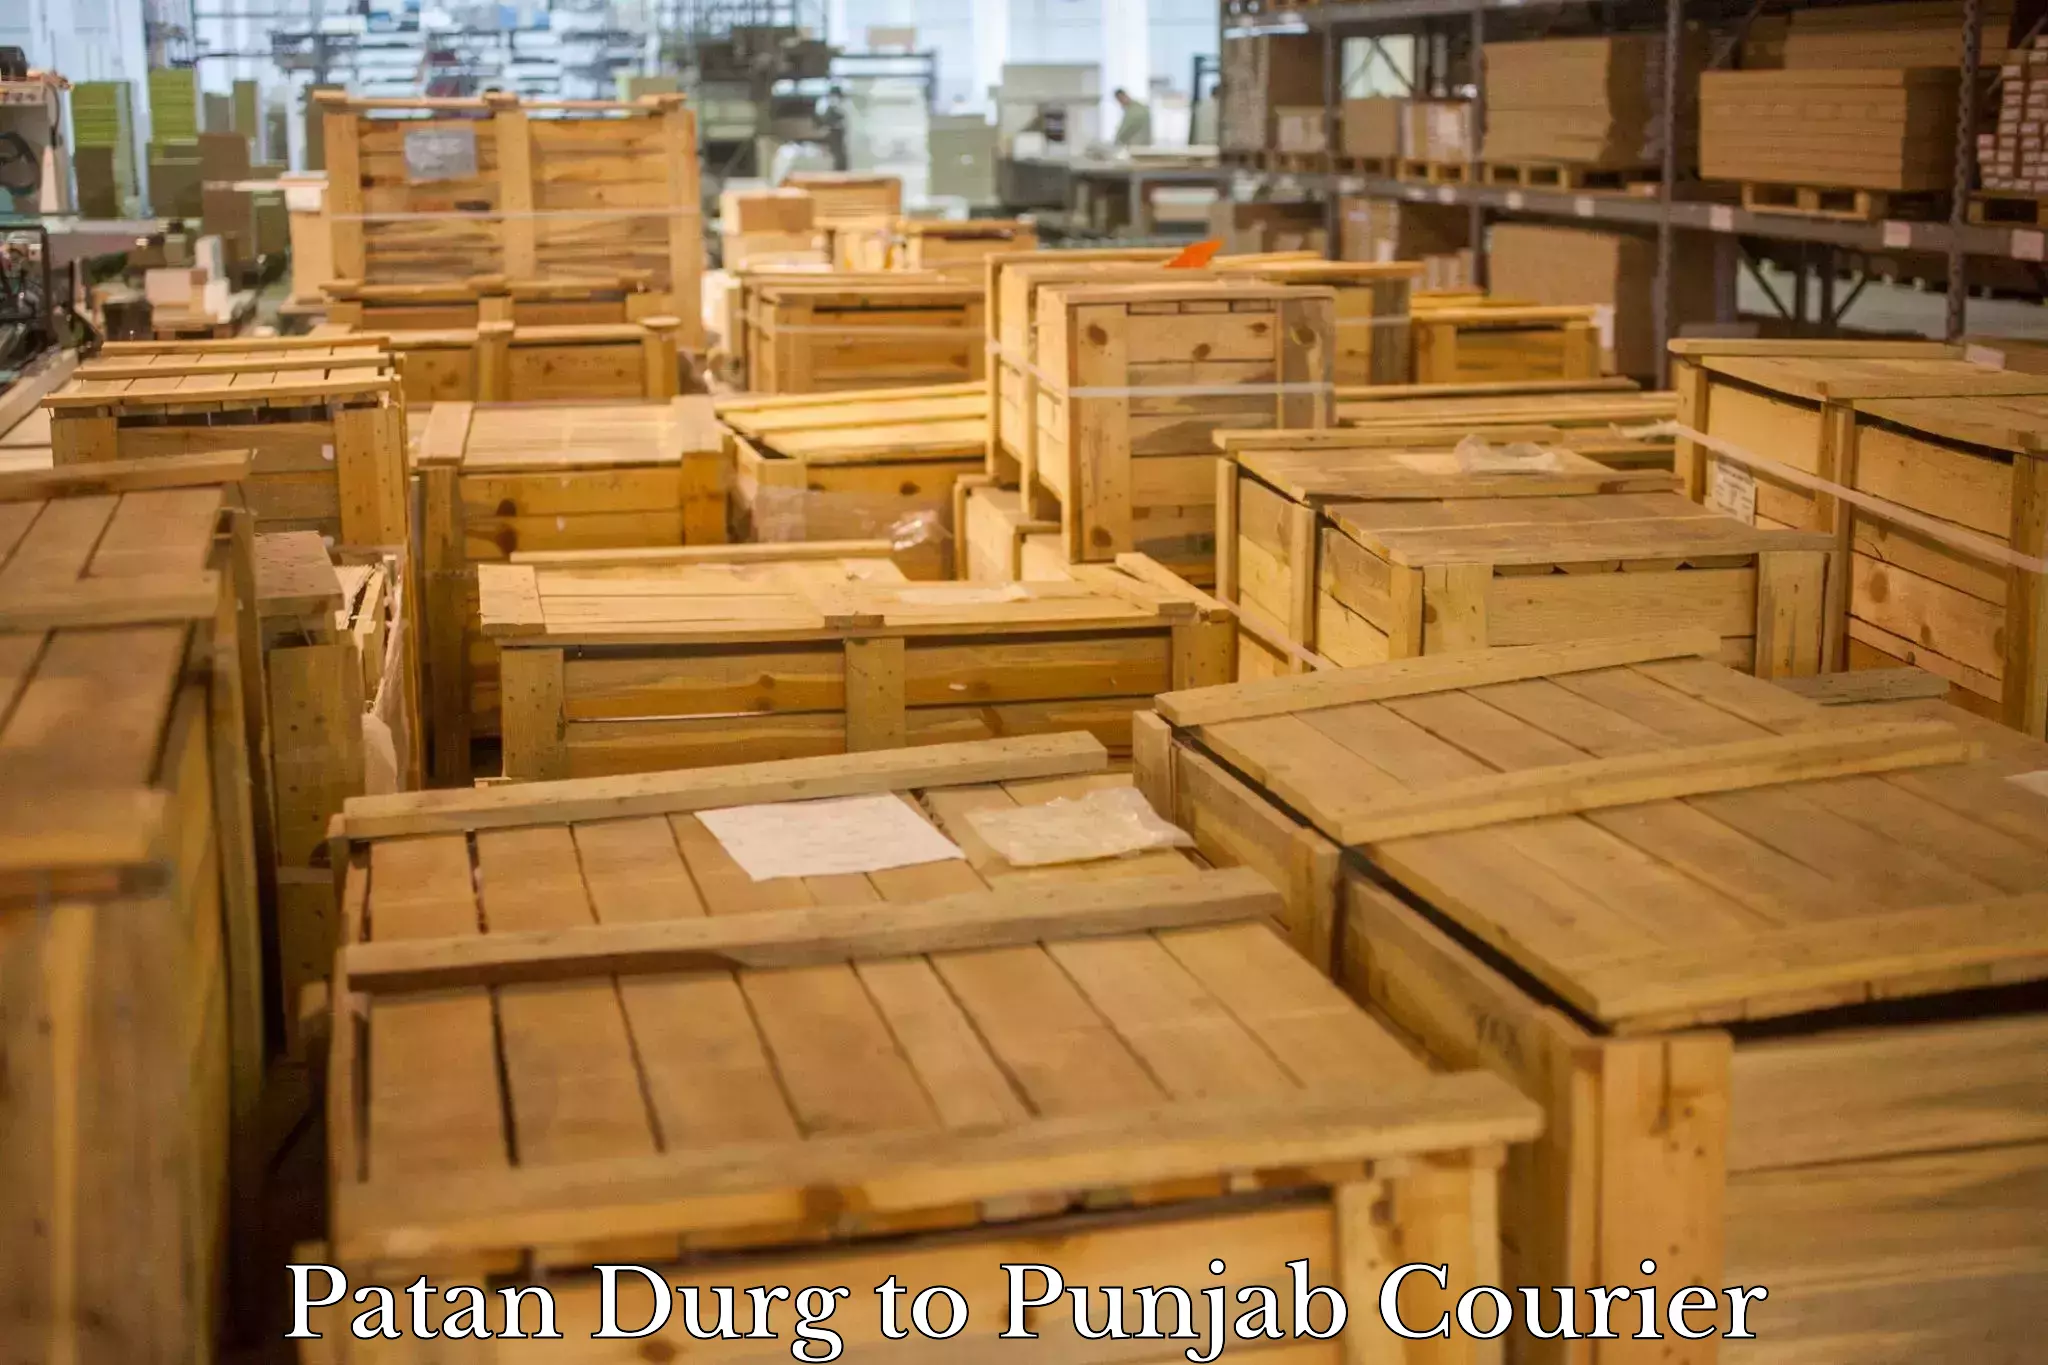 Efficient logistics management Patan Durg to Punjab